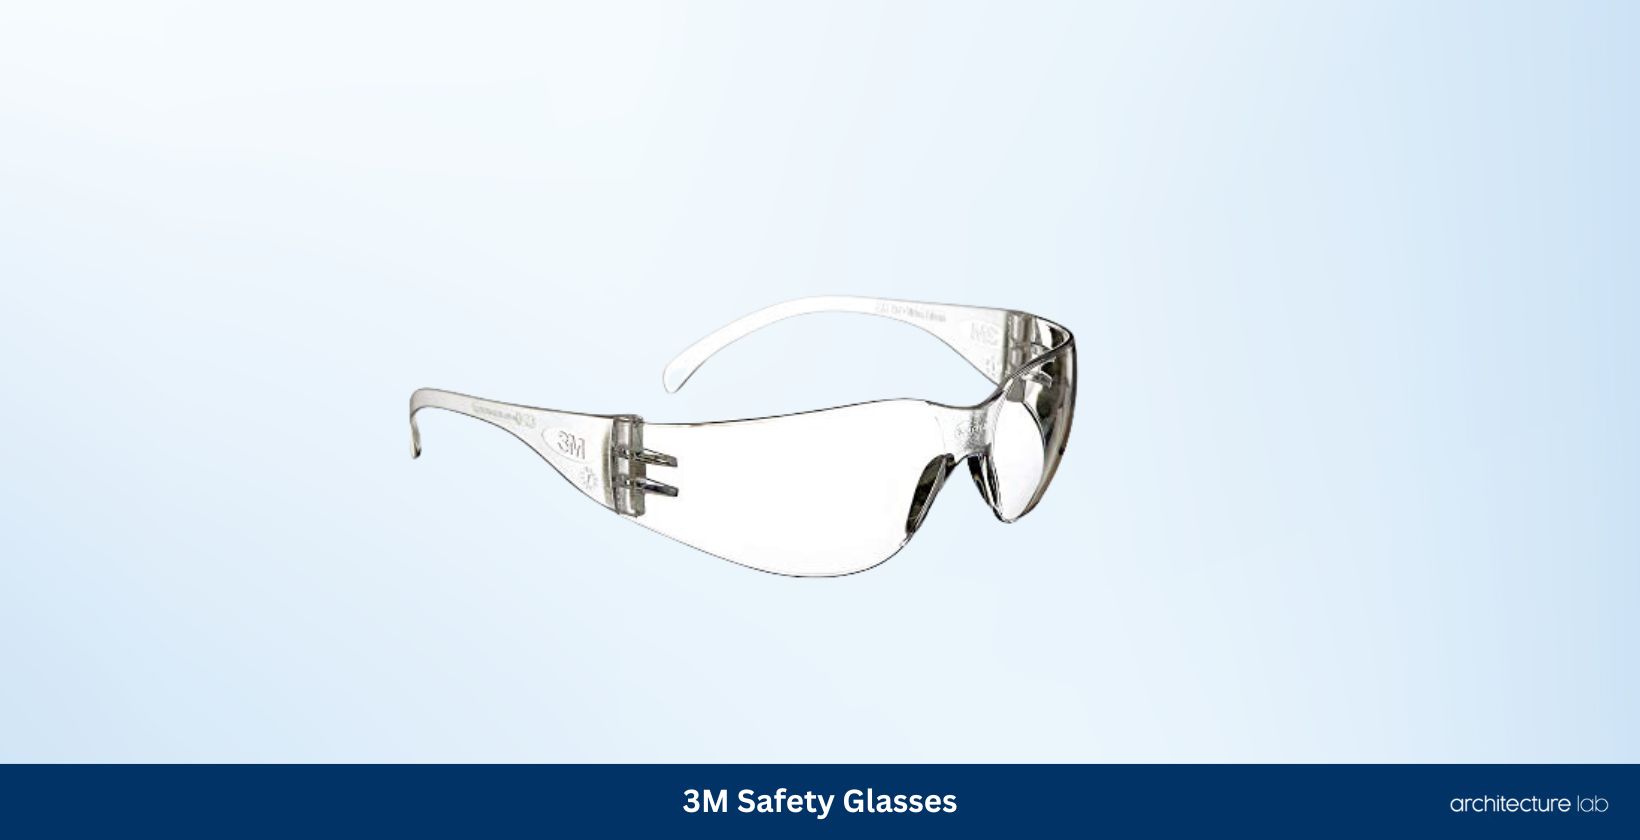 Virtua ccs protective eyewear 3m safety glasses